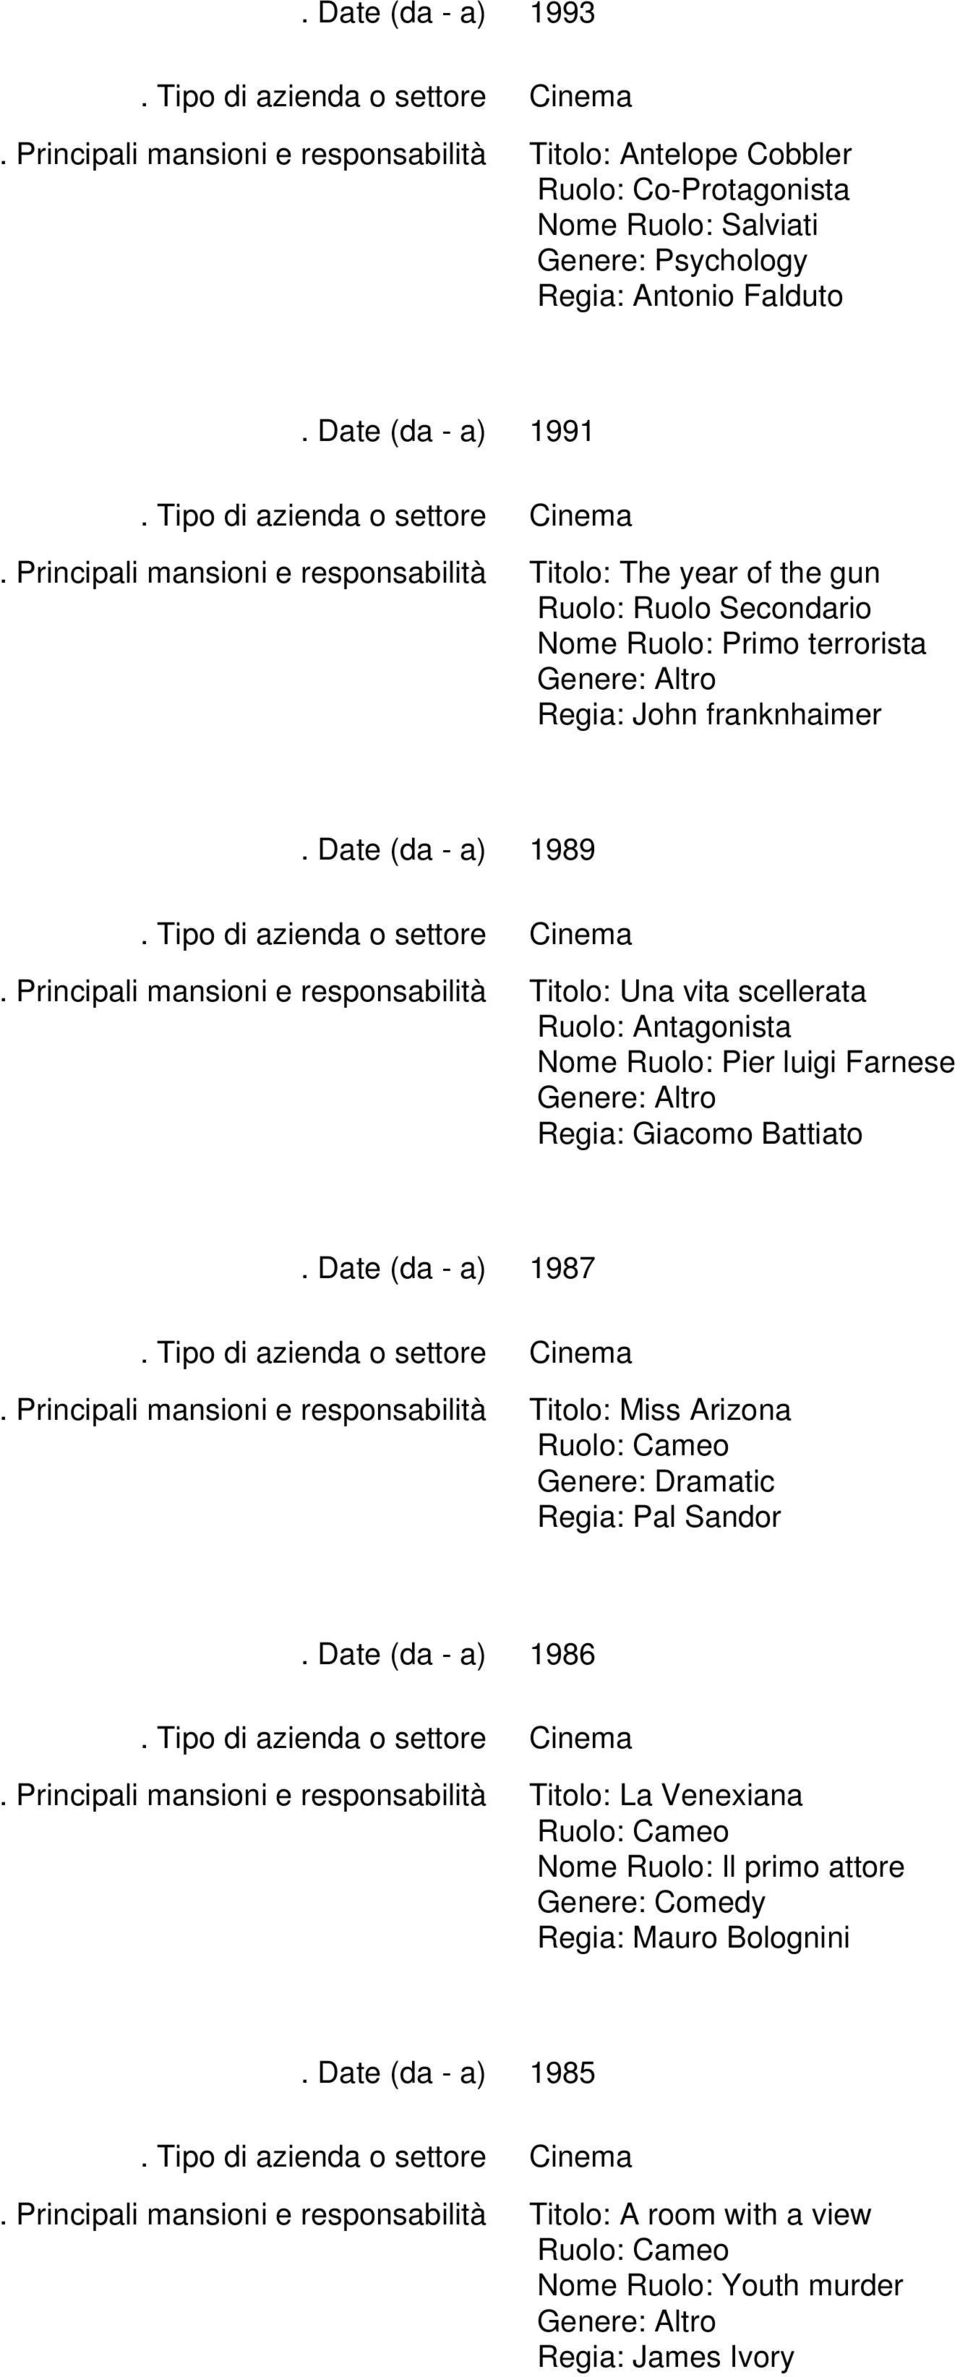 Pier luigi Farnese Regia: Giacomo Battiato 1987 Titolo: Miss Arizona Regia: Pal Sandor 1986 Titolo: La Venexiana Nome Ruolo: